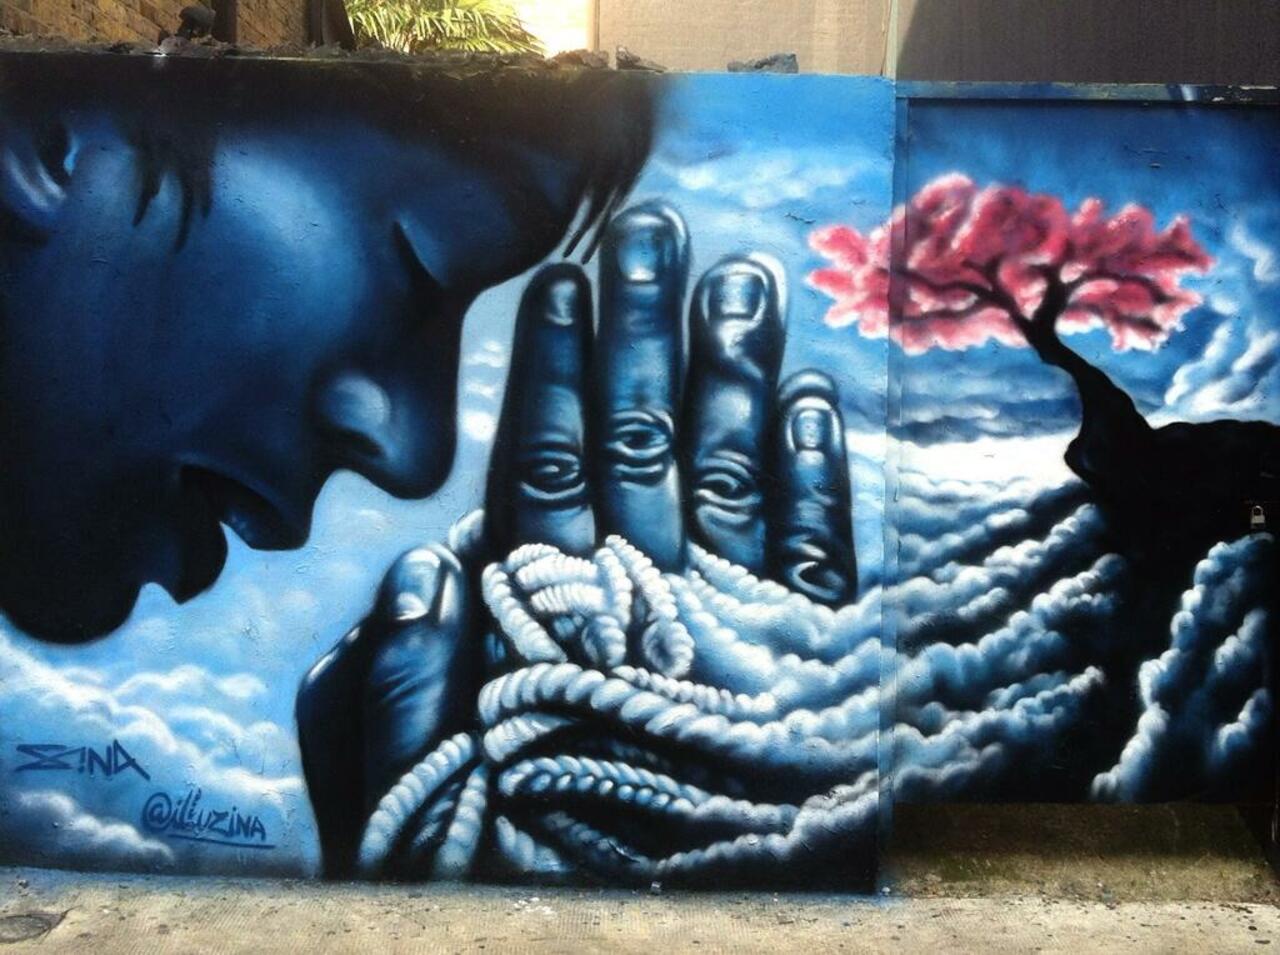 RT @designopinion: Beautiful @illuzina #streetart in Shoreditch - #art #graffiti @GoogleStreetArt @MolokoVelloce @GraffitiFeed https://t.co/JLdj9tZgsf